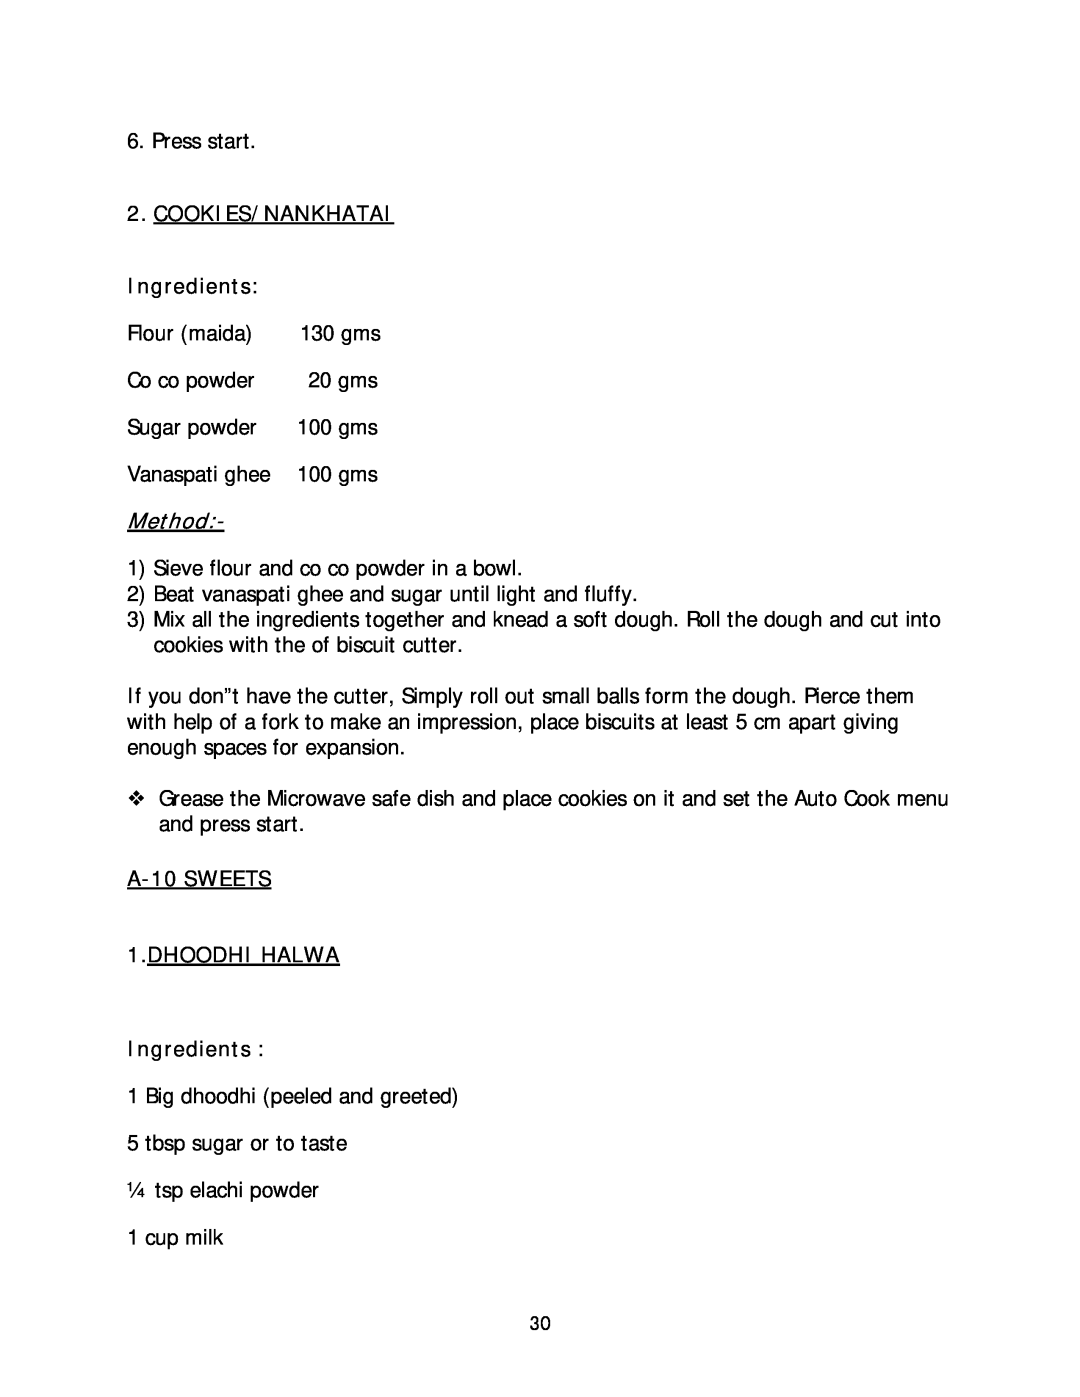 Haier HIL 2810EGCB manual Press start, Cookies/Nankhatai, Method, A-10 SWEETS 1.DHOODHI HALWA Ingredients 